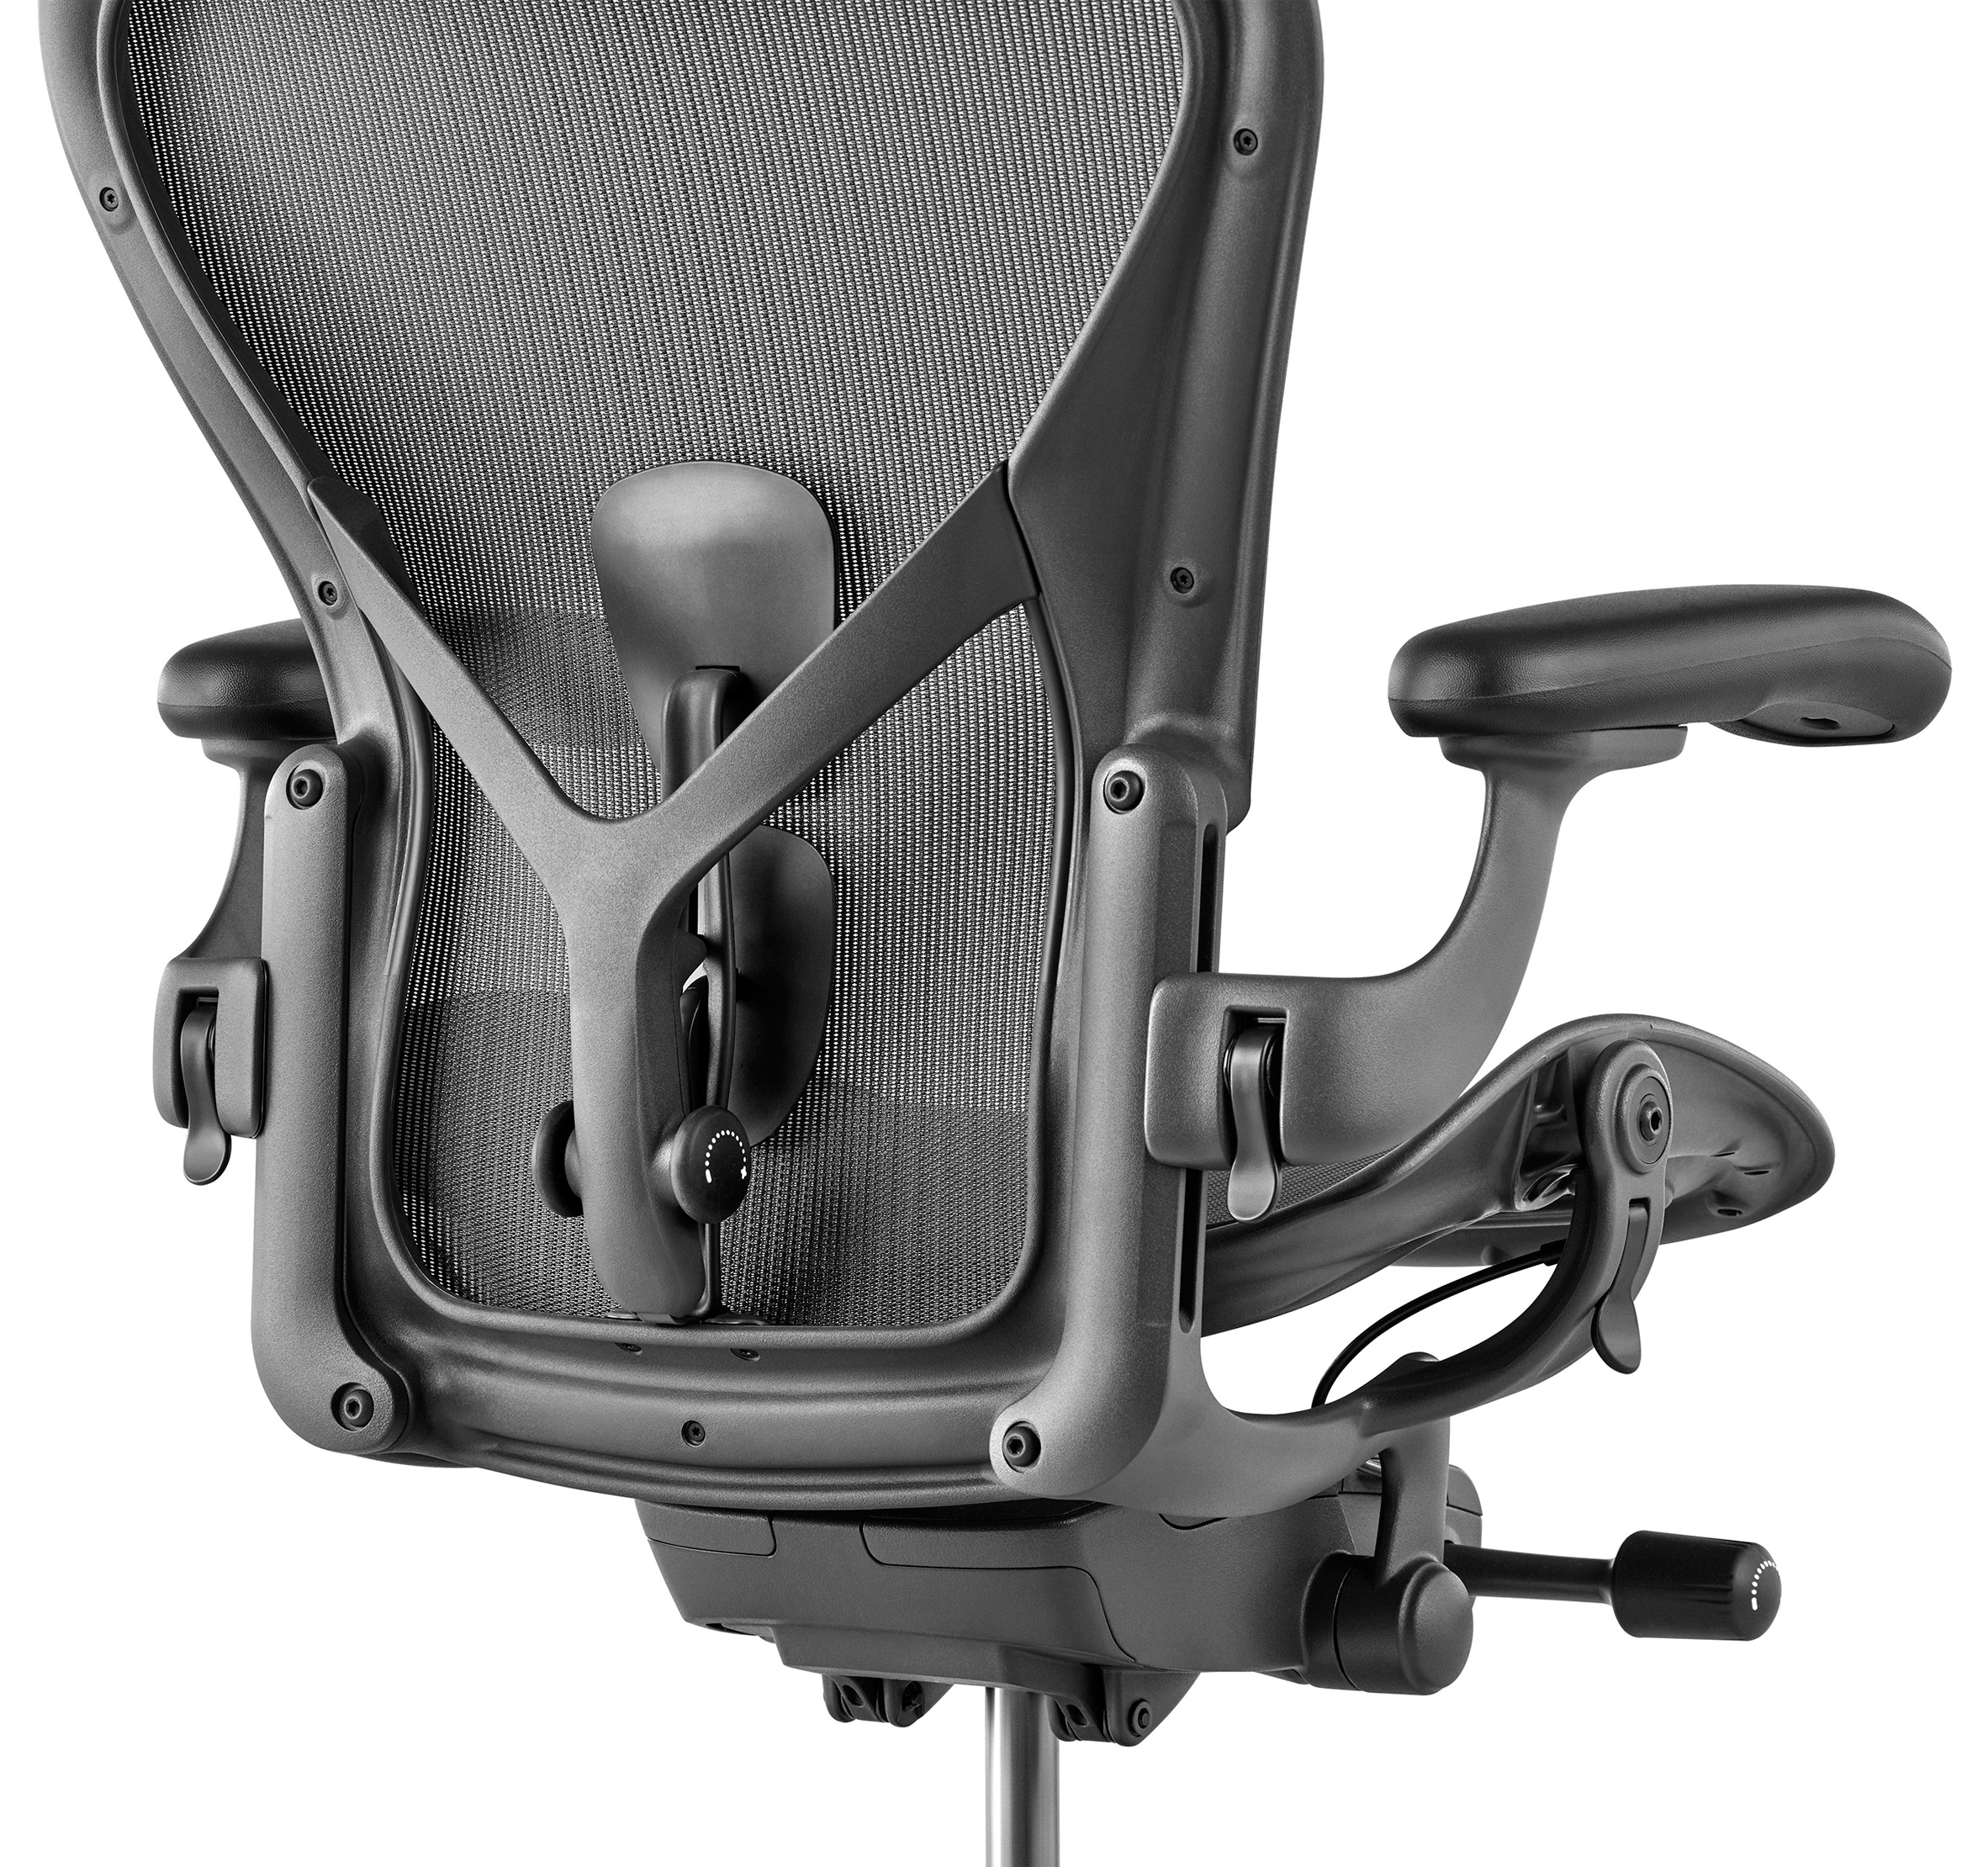 Herman Miller Updates Iconic Aeron Office Chair